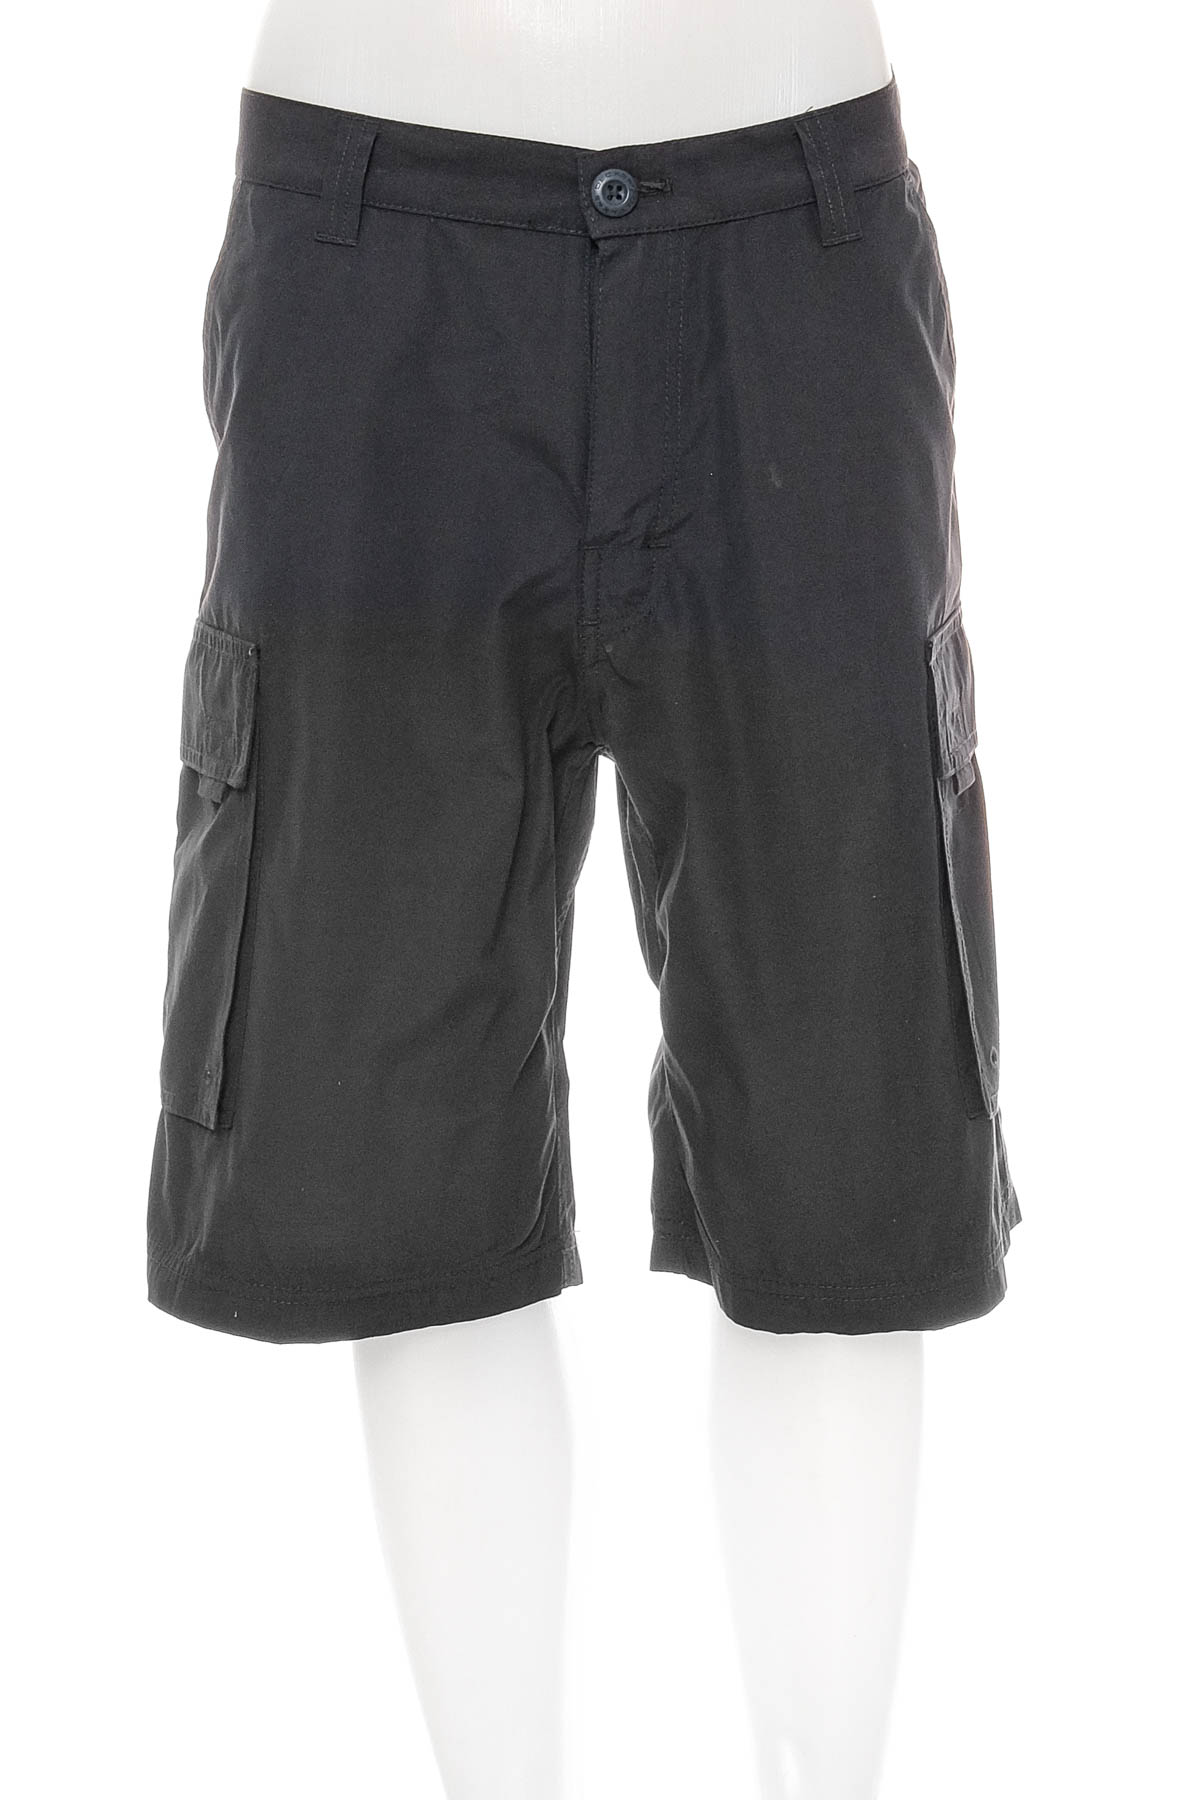 Men's shorts - DECKERS - 0